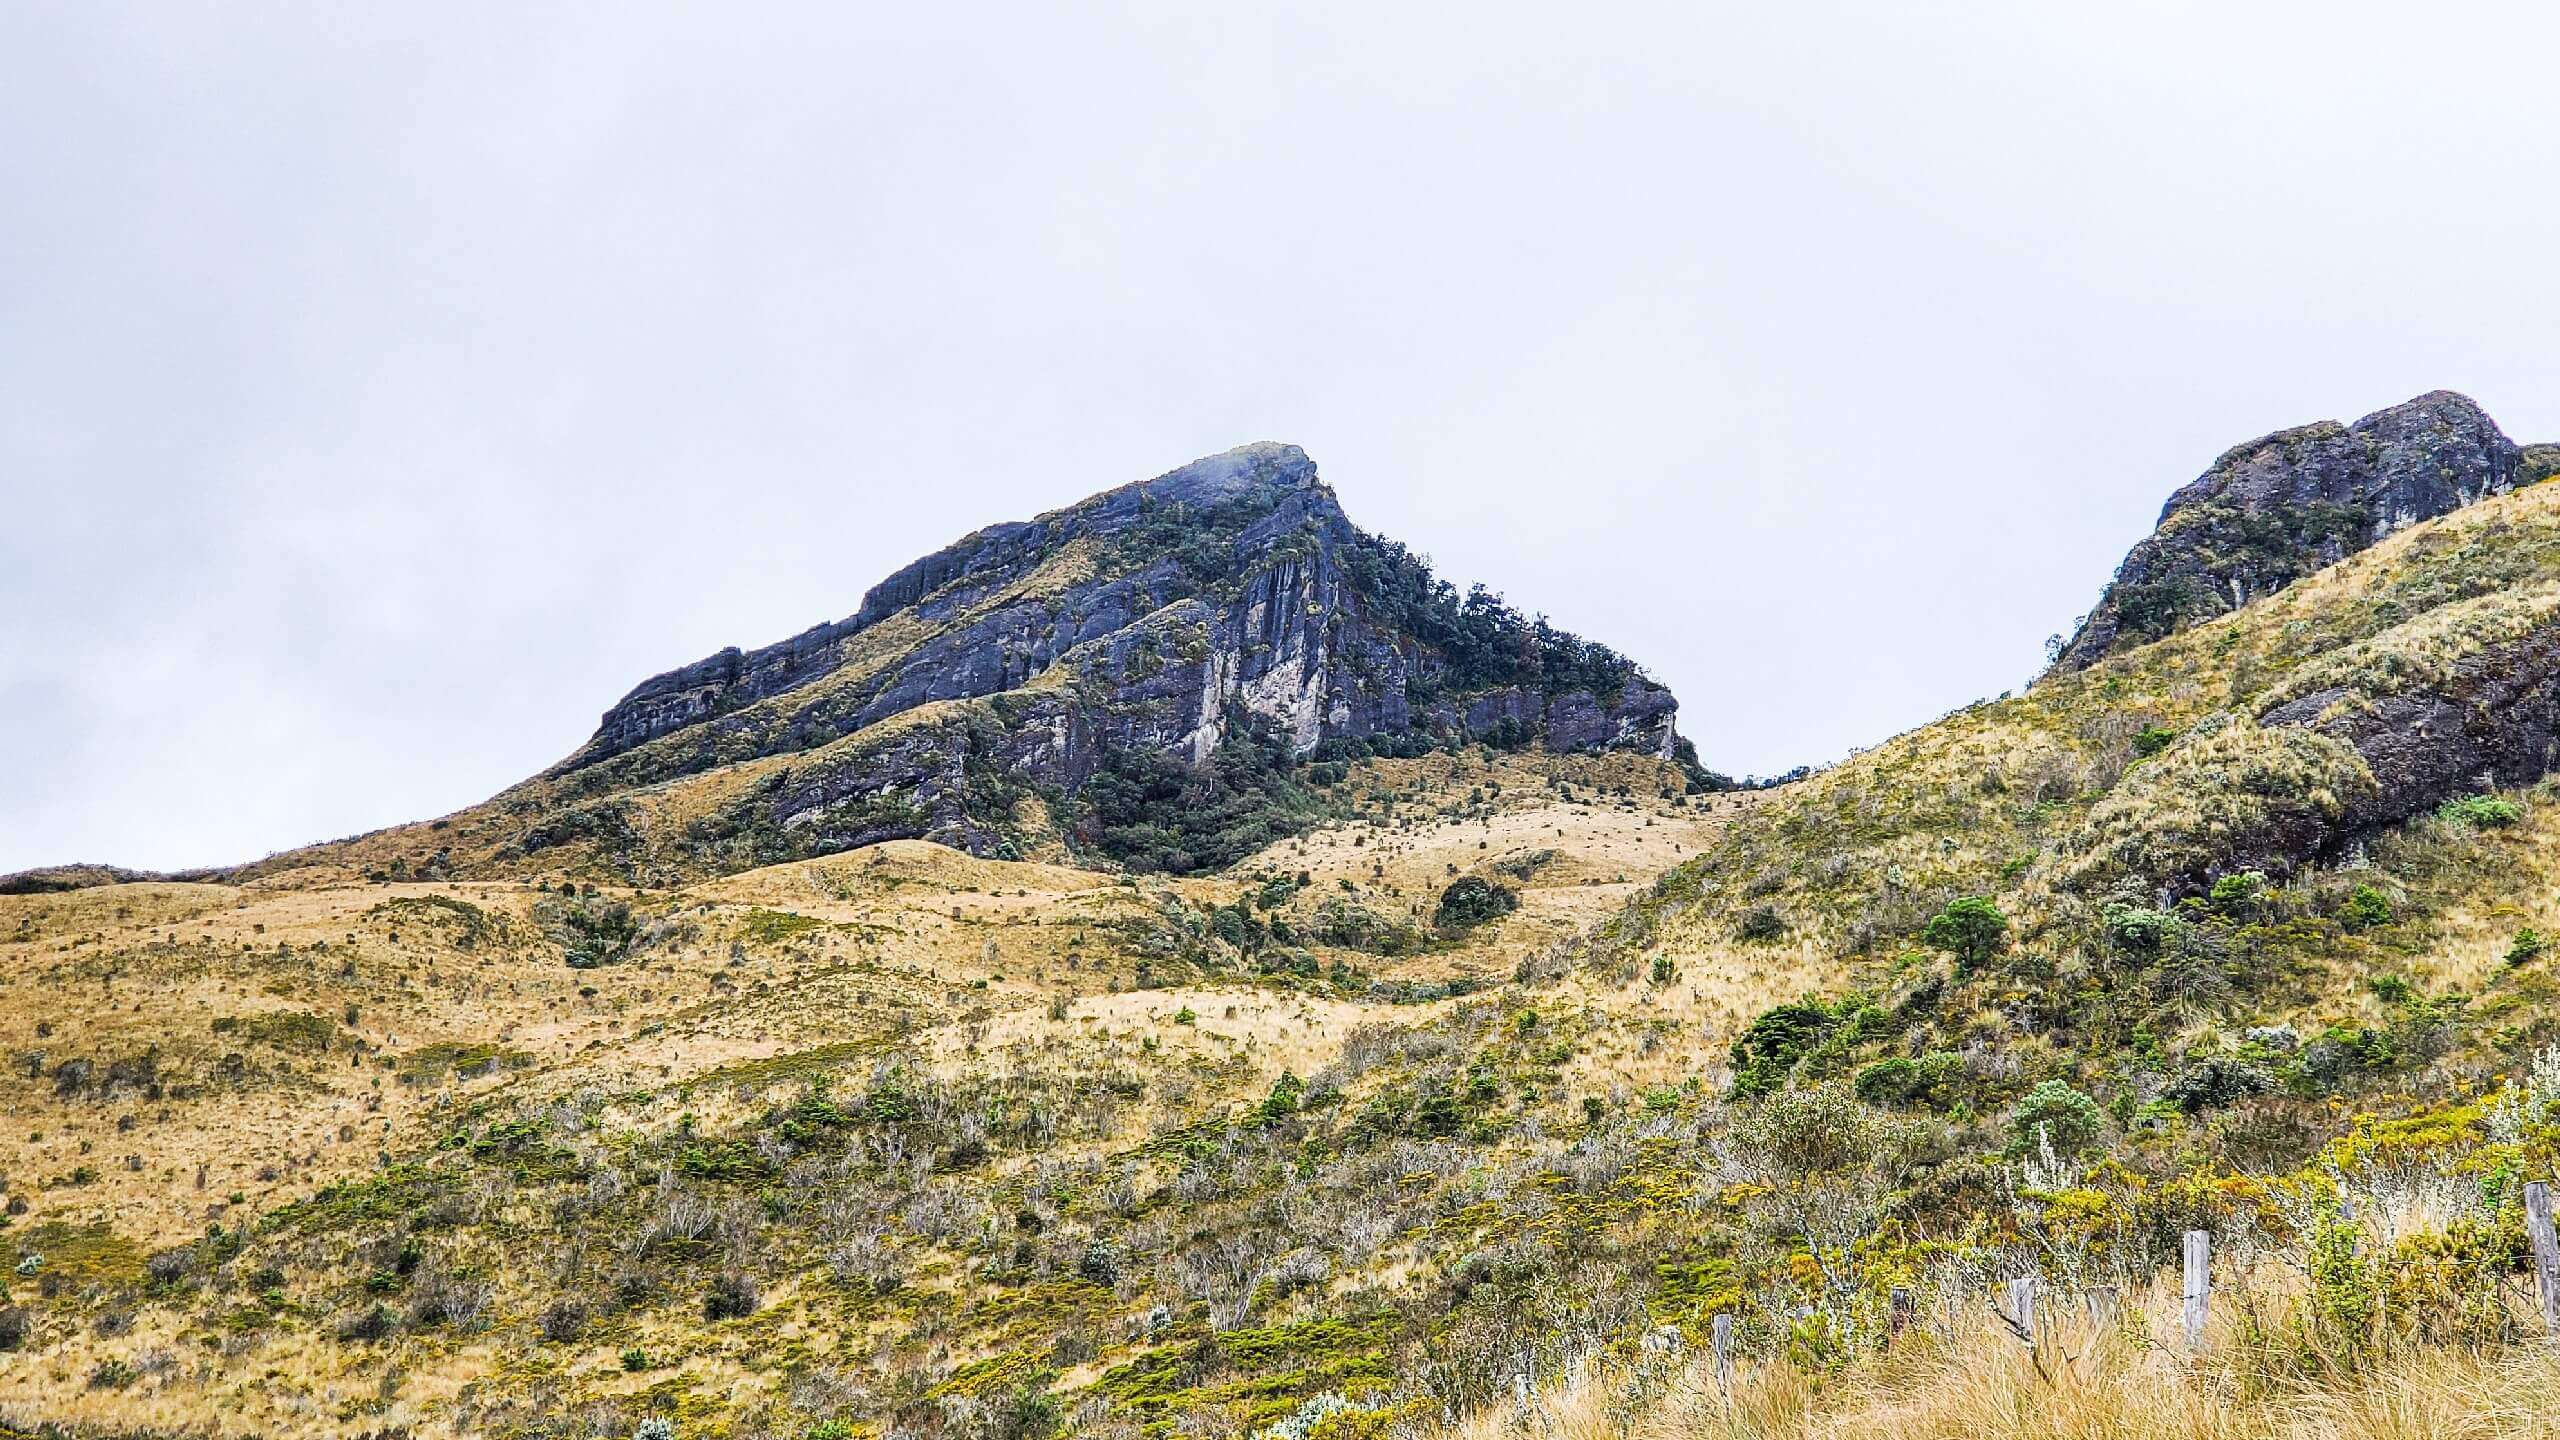 North summit of Pasochoa volcano